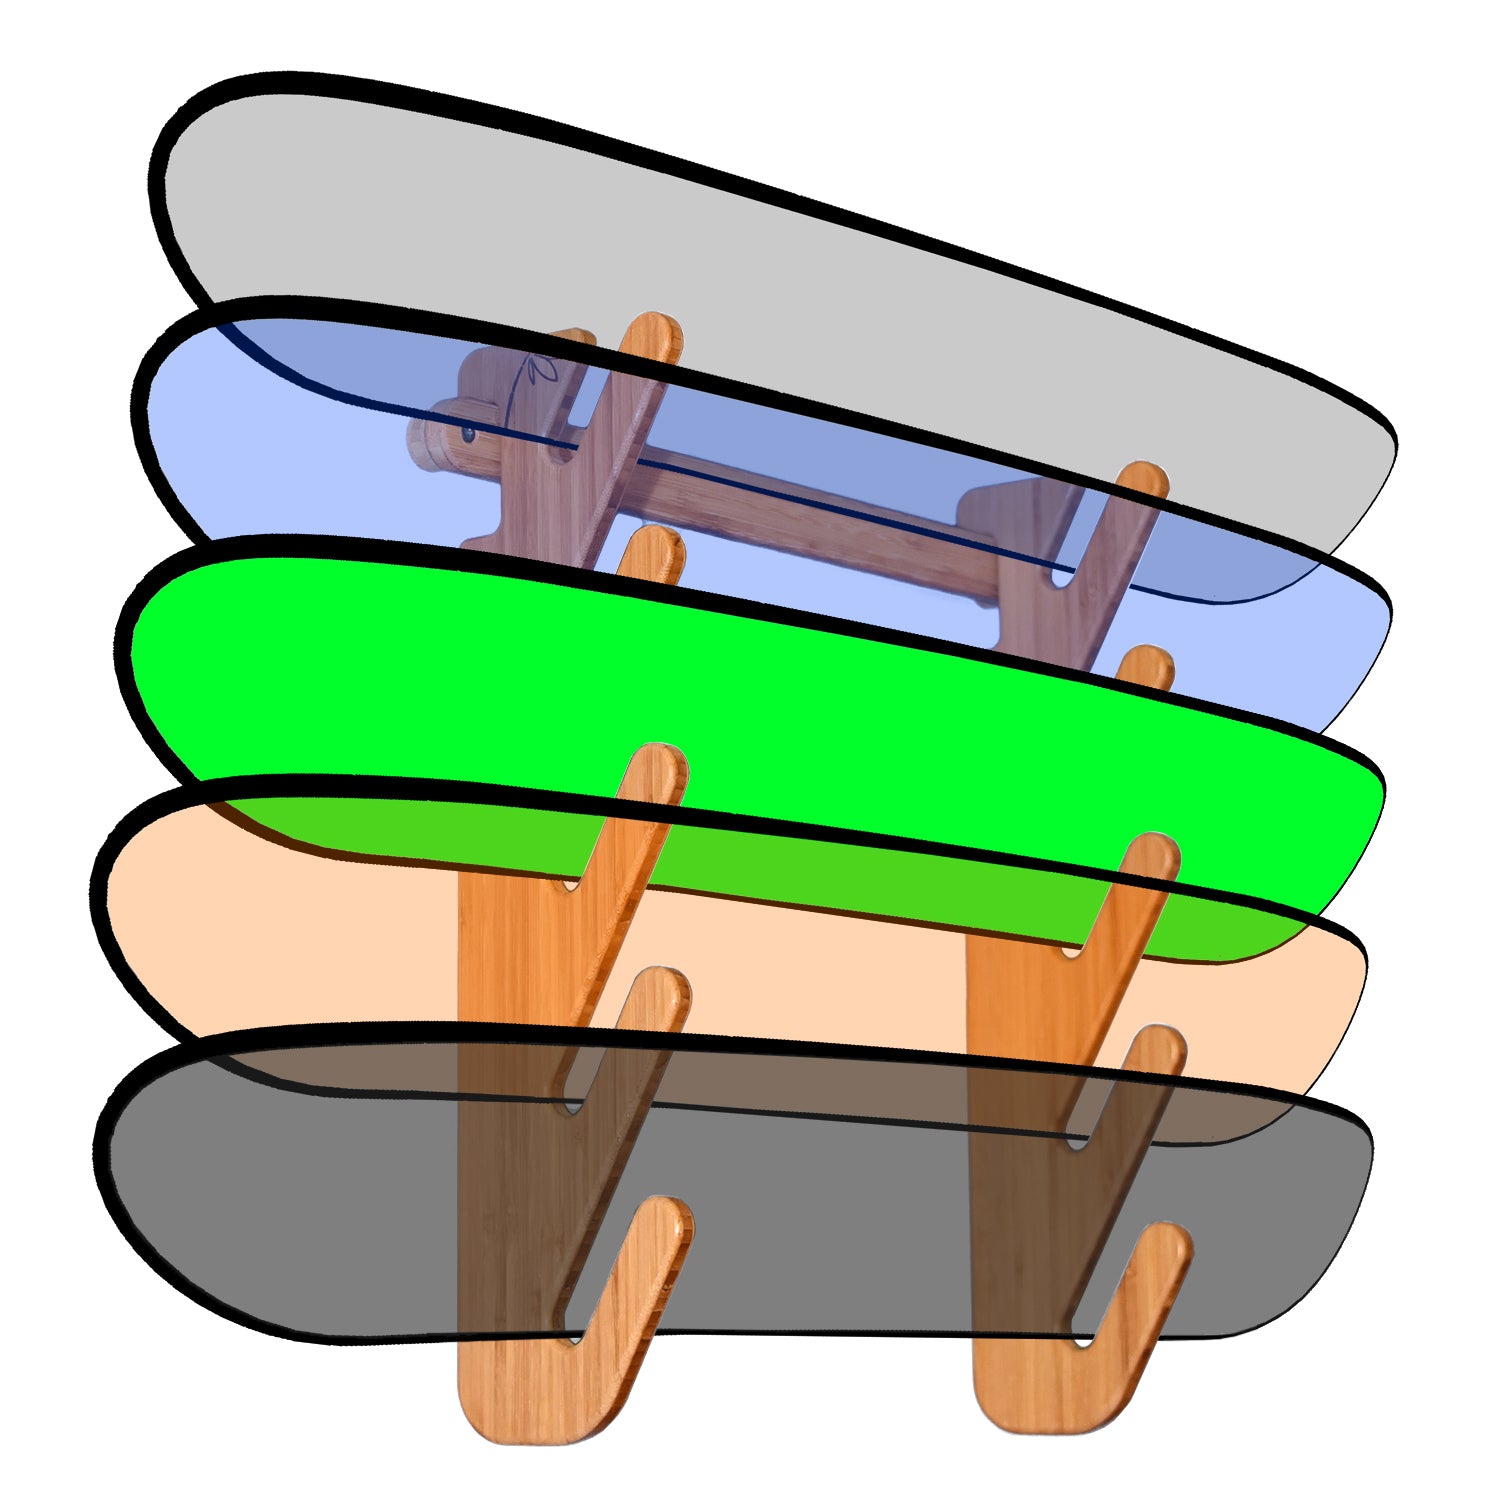 Skate Deck Rack | Horizontal Wall-Mounted Indoor Skateboard Rack - The Lana`i Series